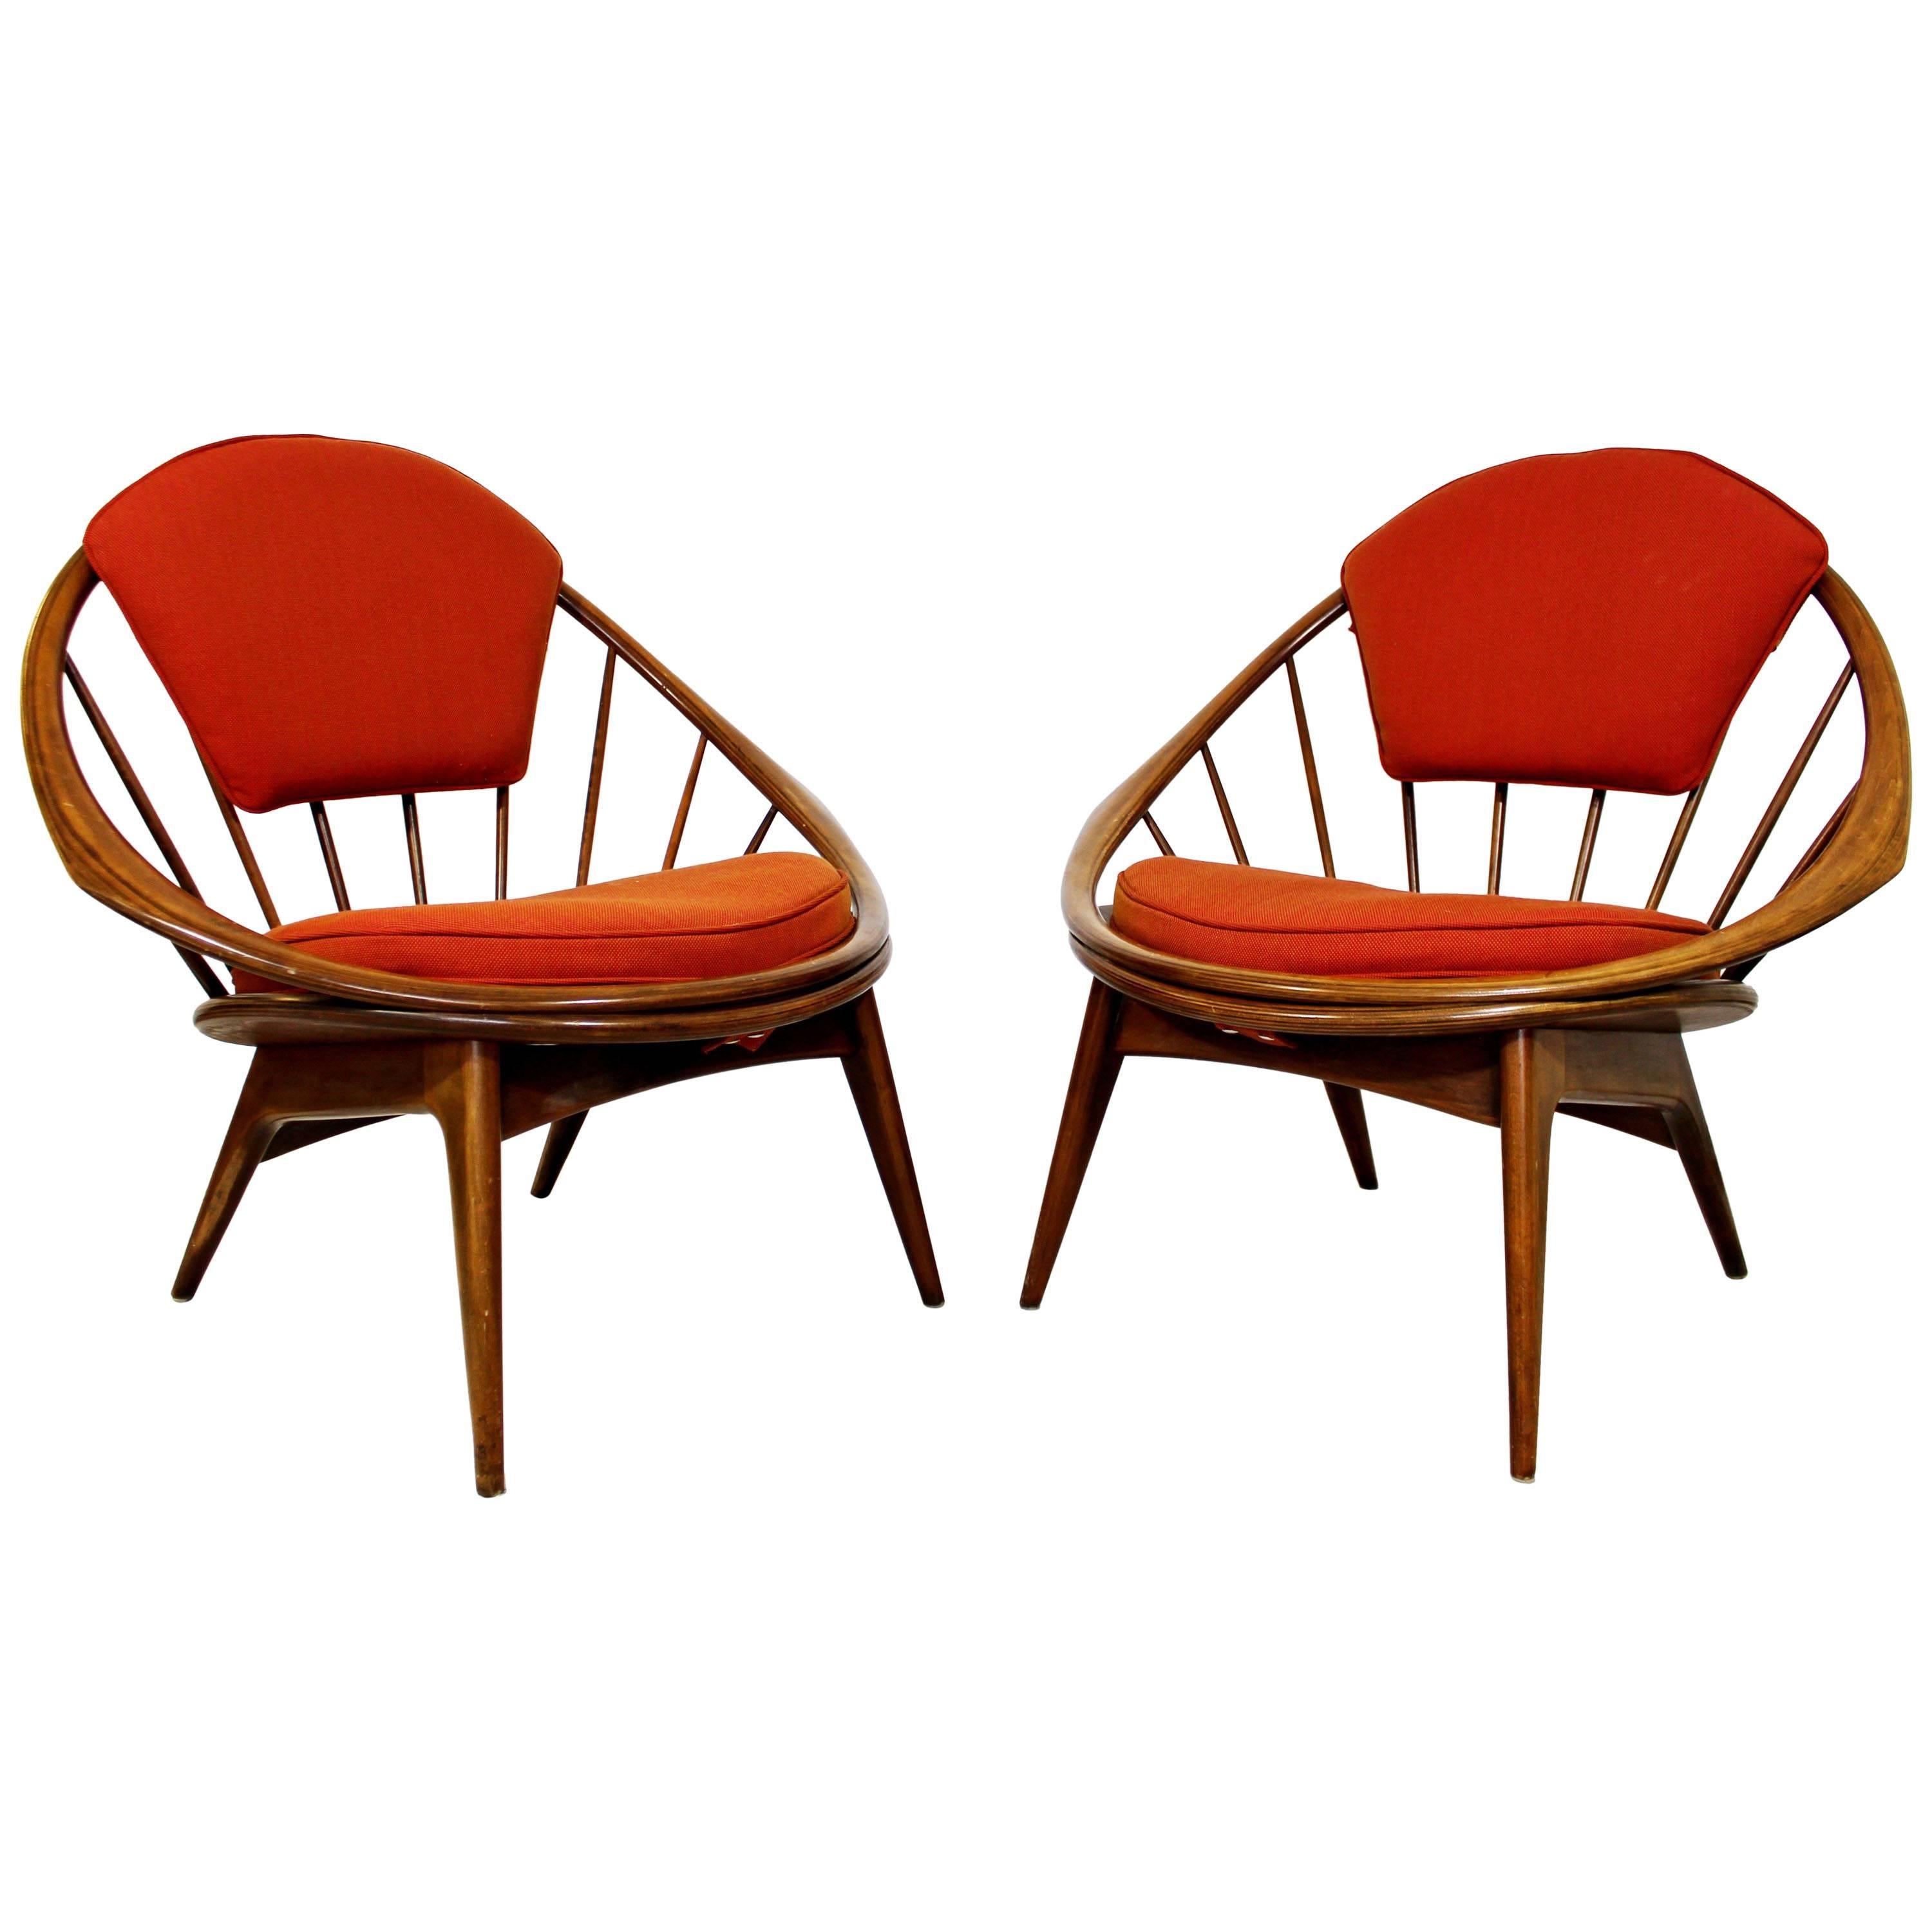 Pair of Signed Hoop Chairs by Ib Kofod-Larsen